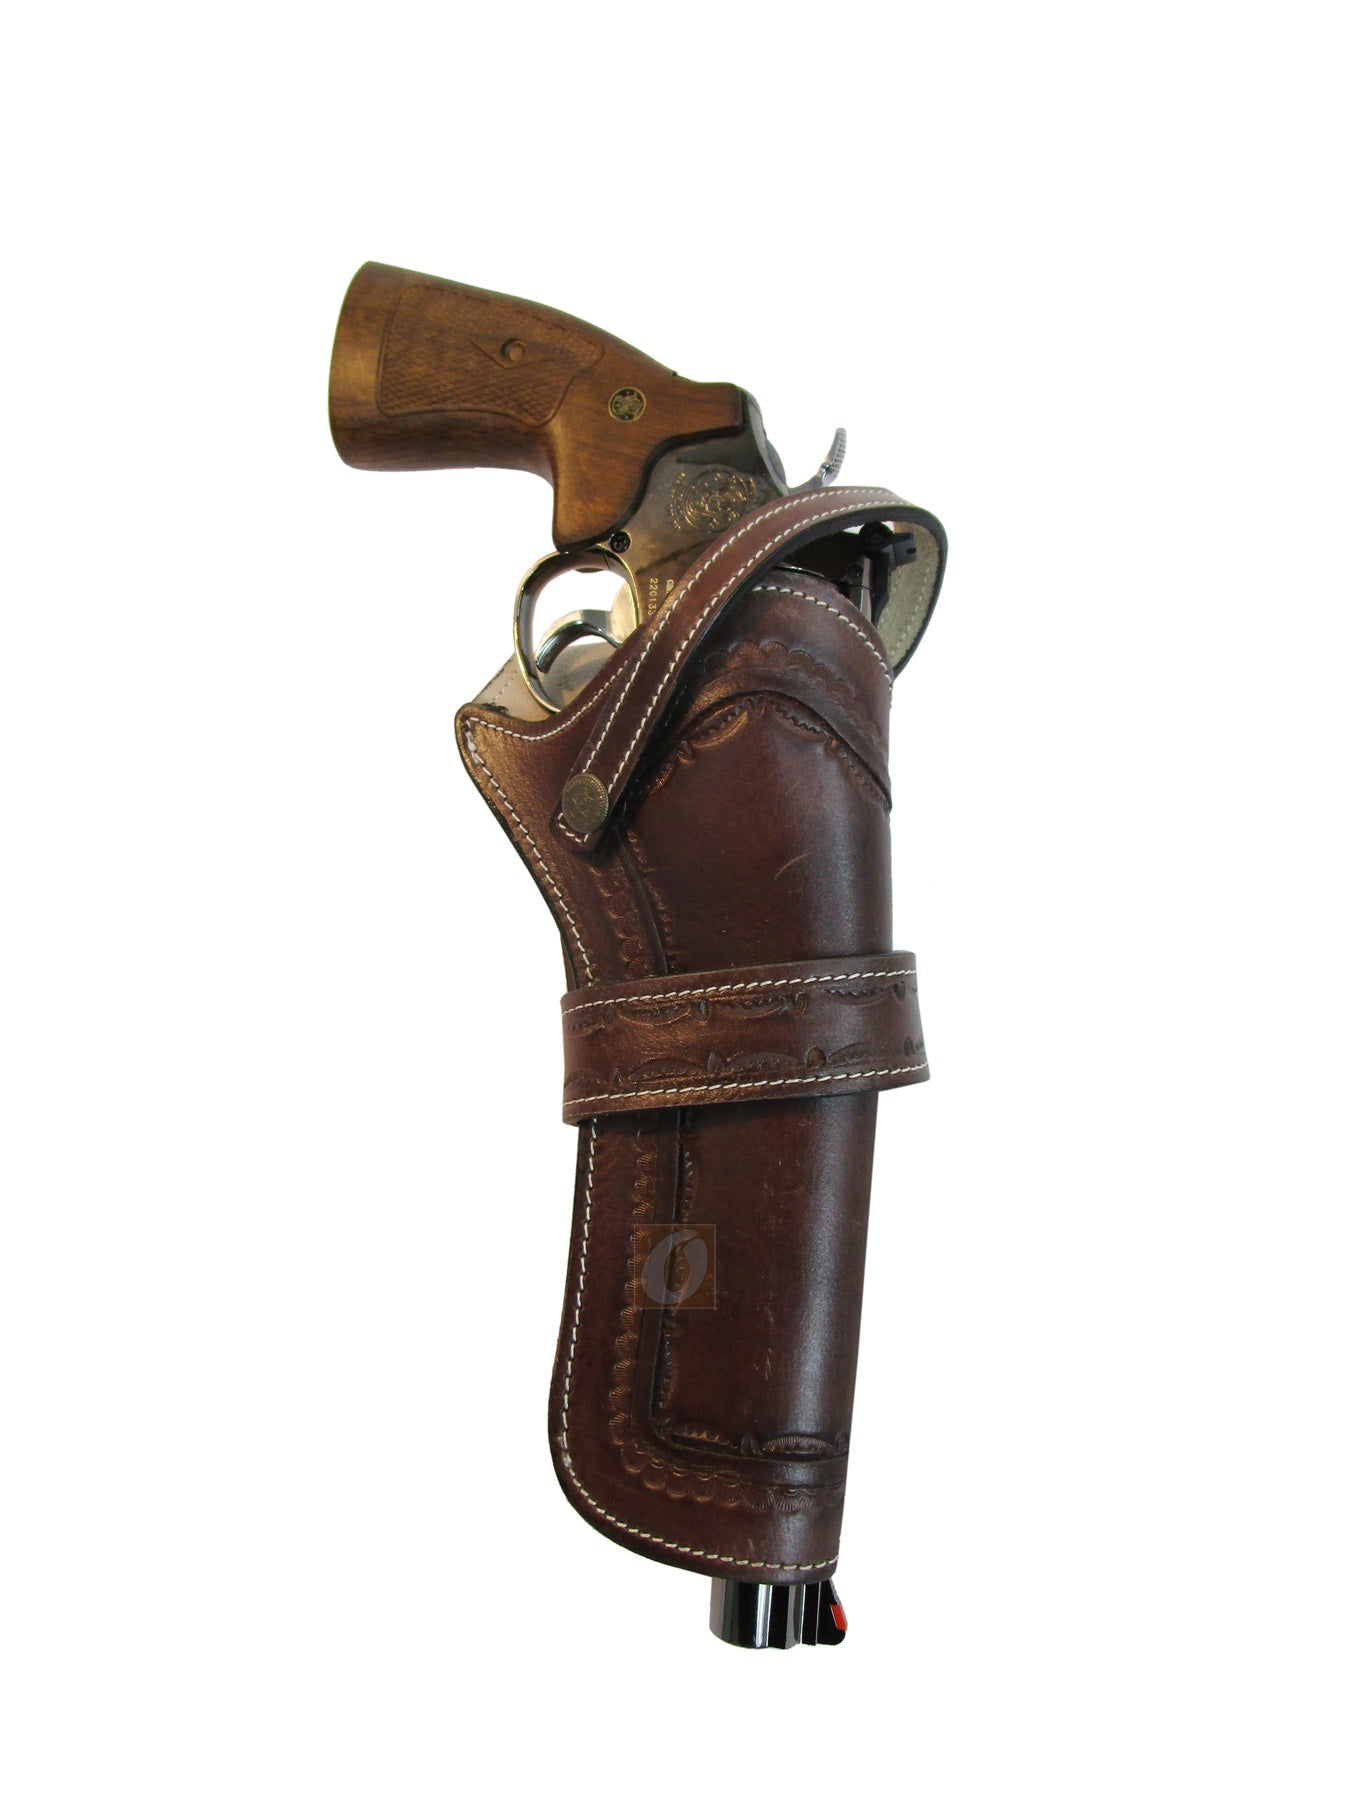 Leather Holster Western Pistol Cover Revolver Gun Holder Universal Fit